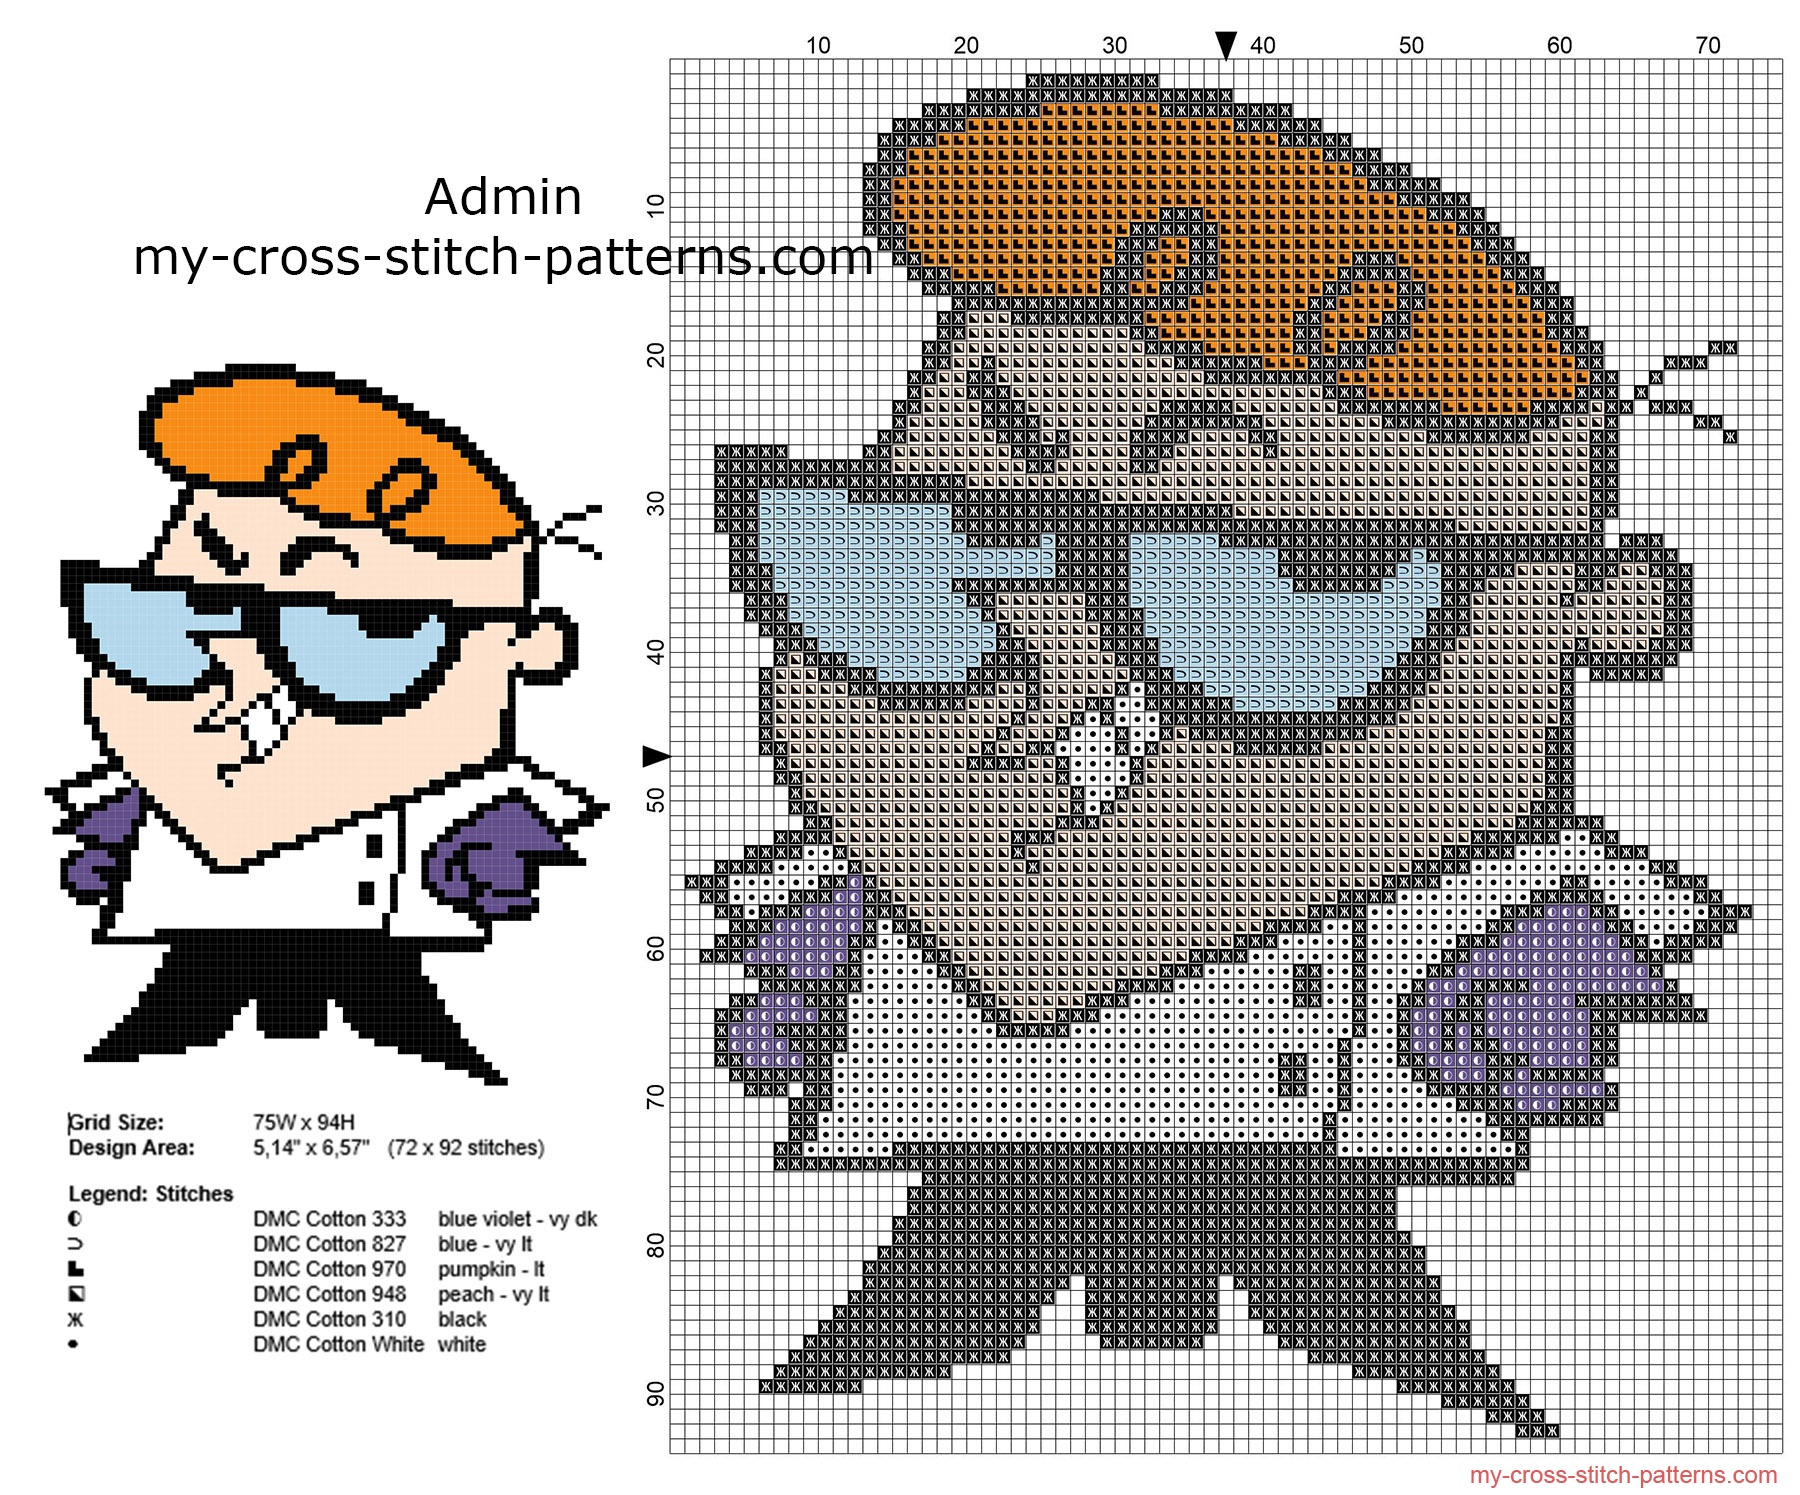 cool_dexter_cross_stitch_pattern_from_dexters_laboratory